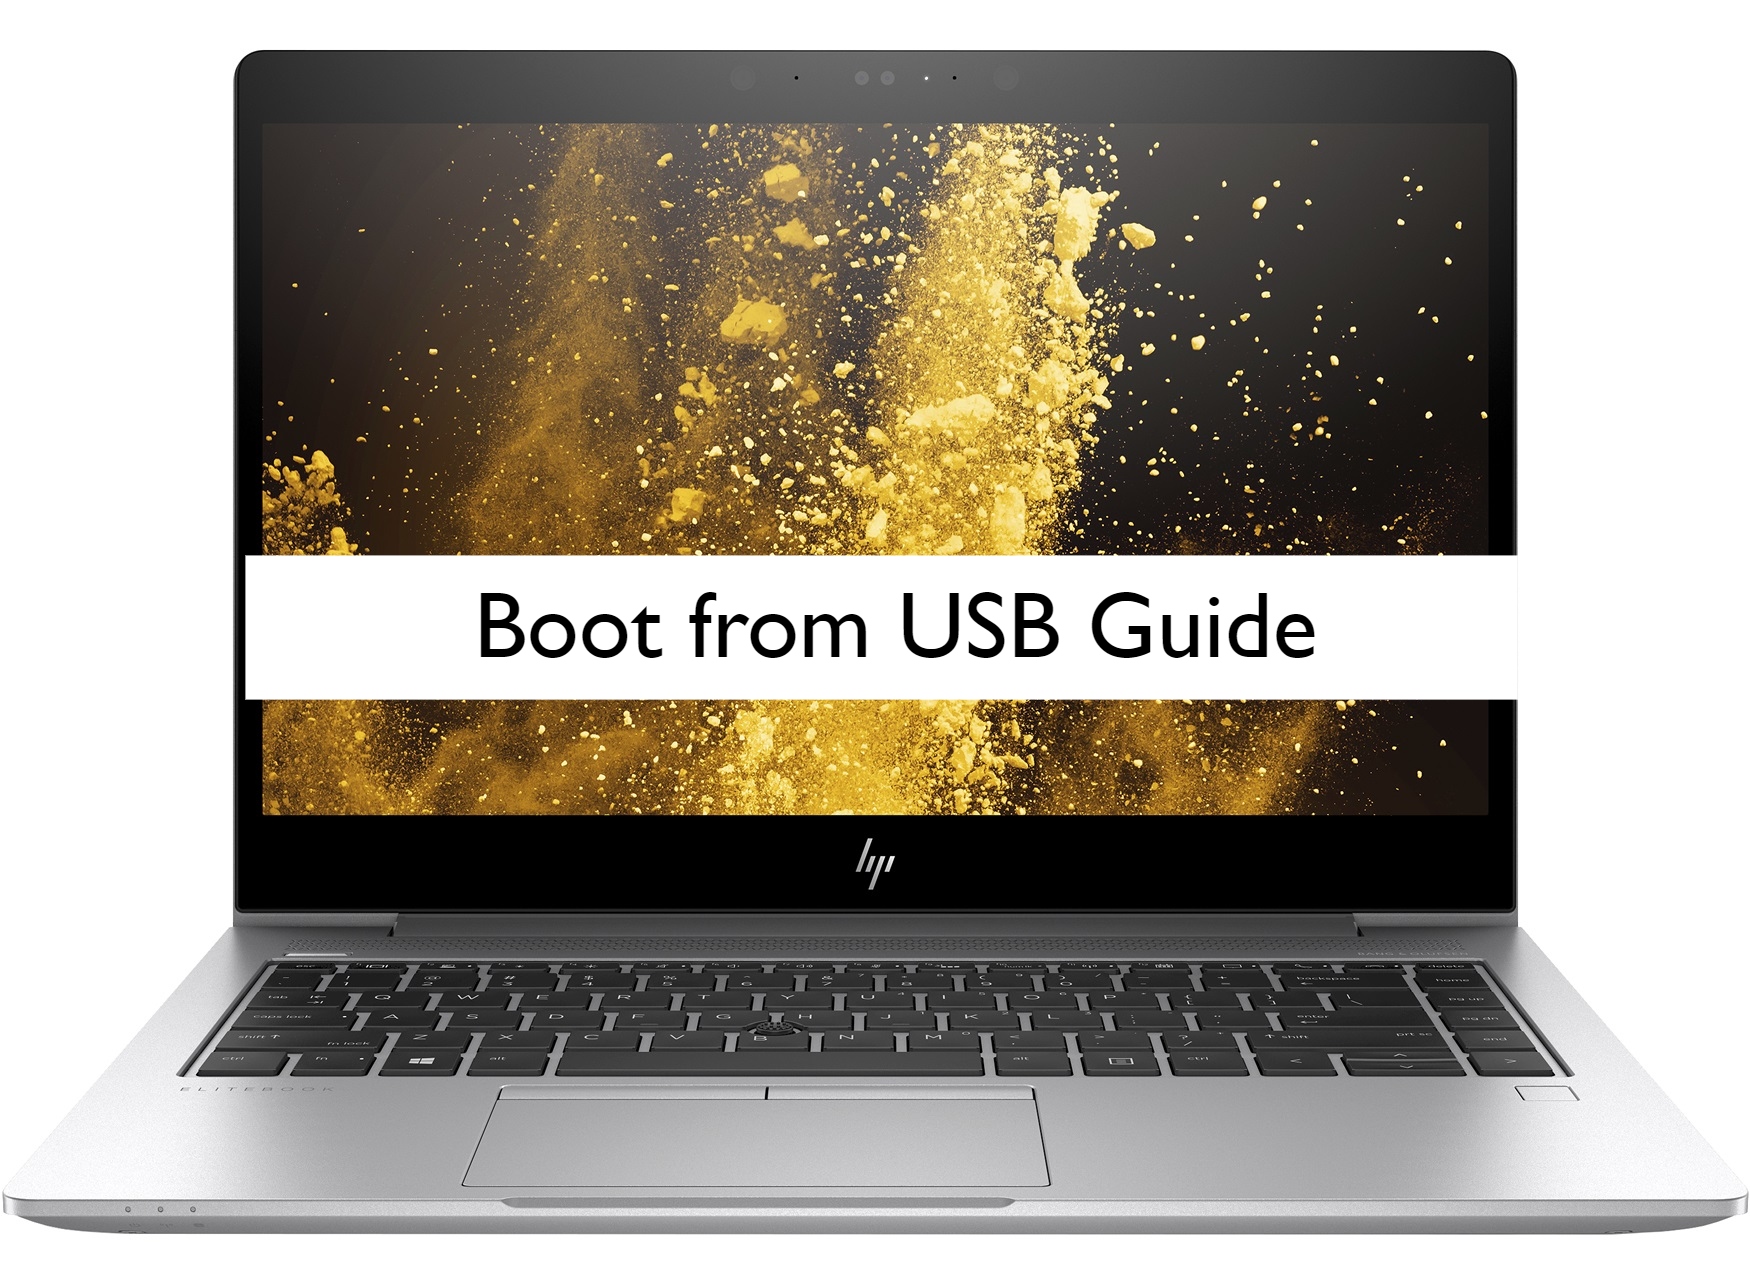 HP Elitebook 840 Boot from USB